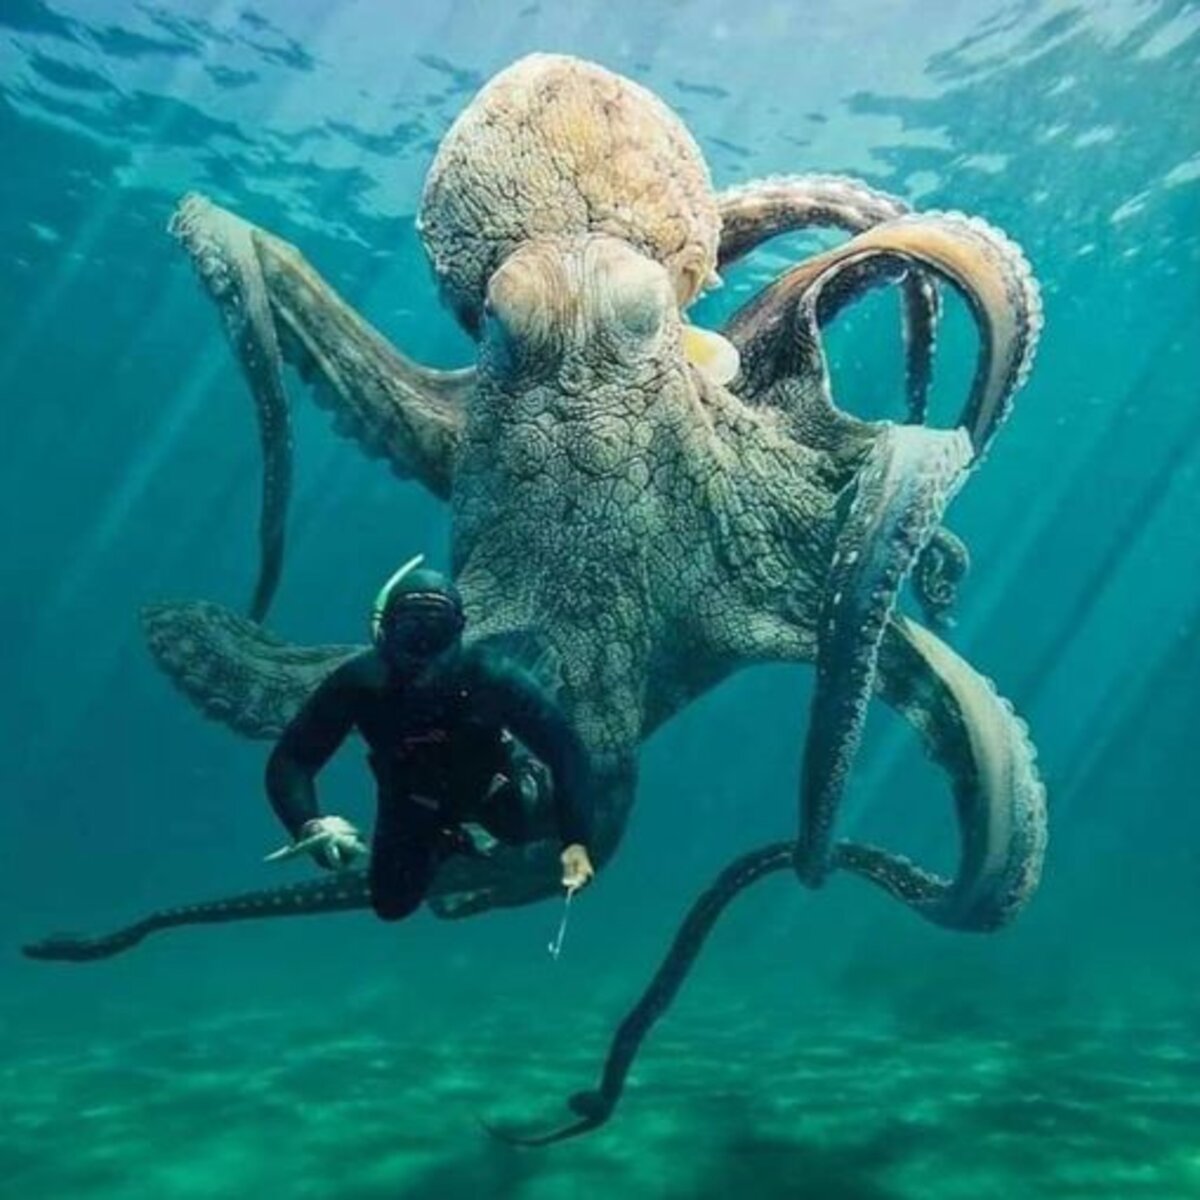 Giant tiktok octopus